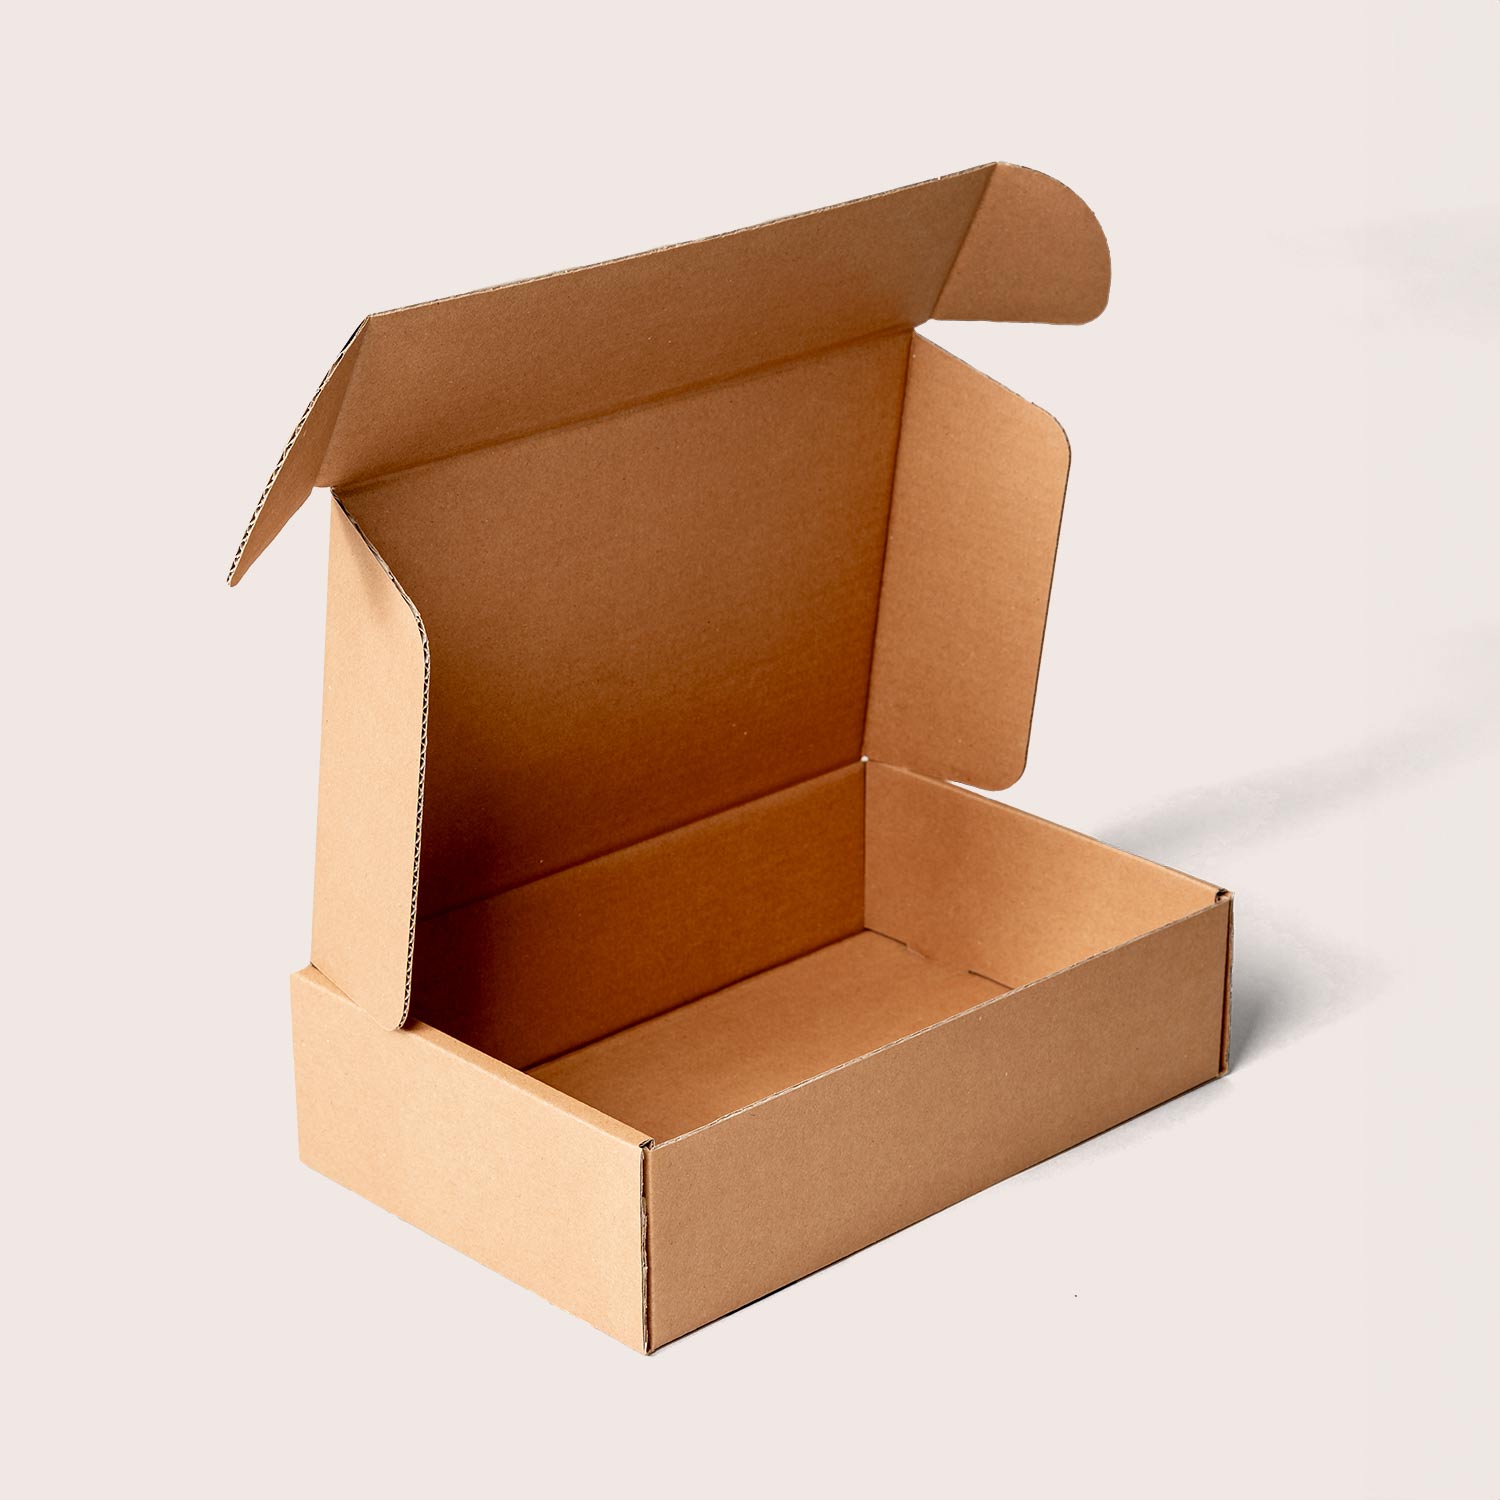 Folding box made from corrugated cardboard